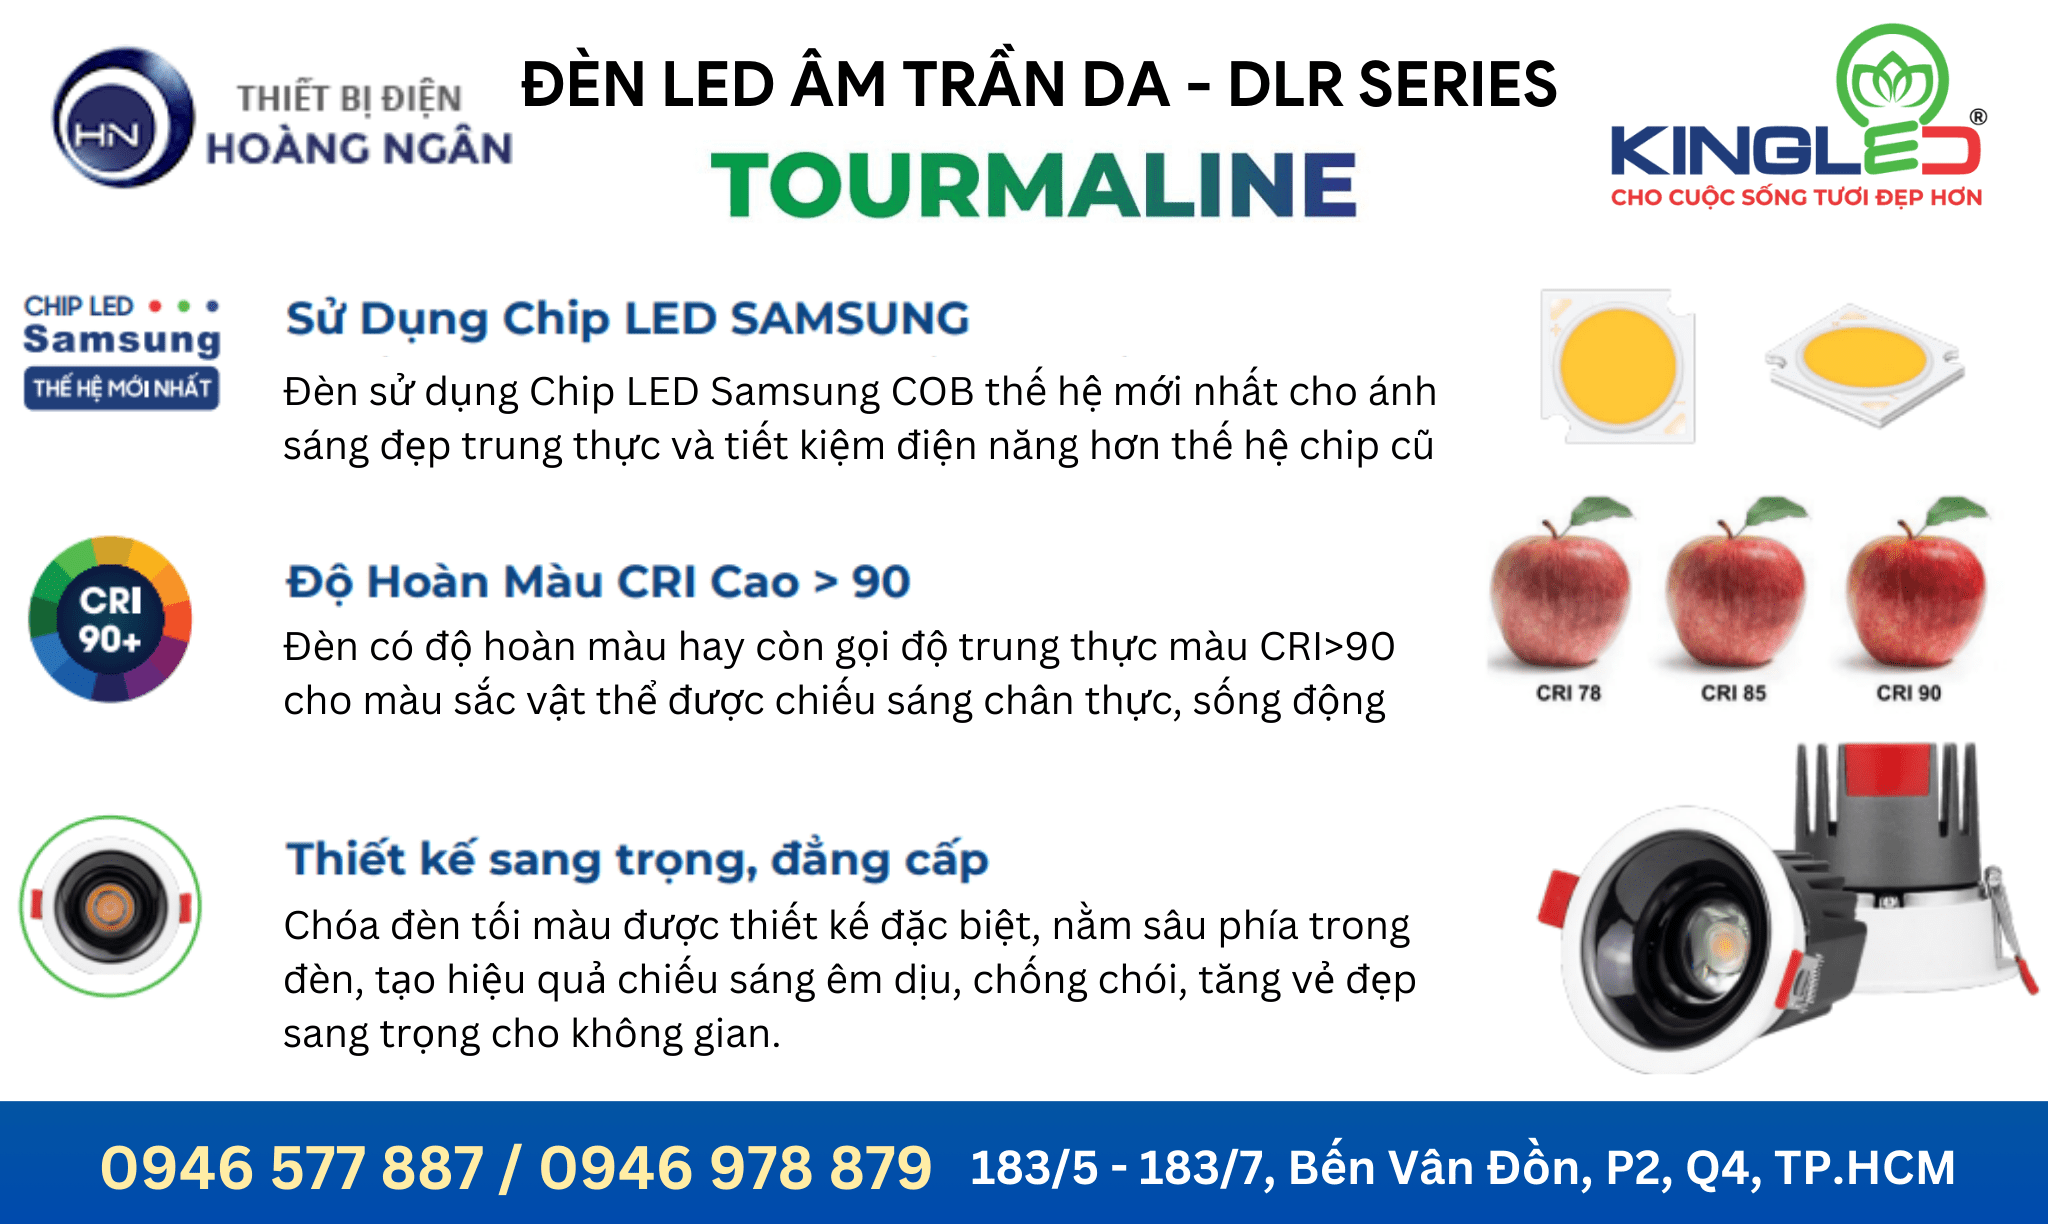 Đèn LED Âm Trần Rọi Tourmaline KingLED (DA-DLR Series)